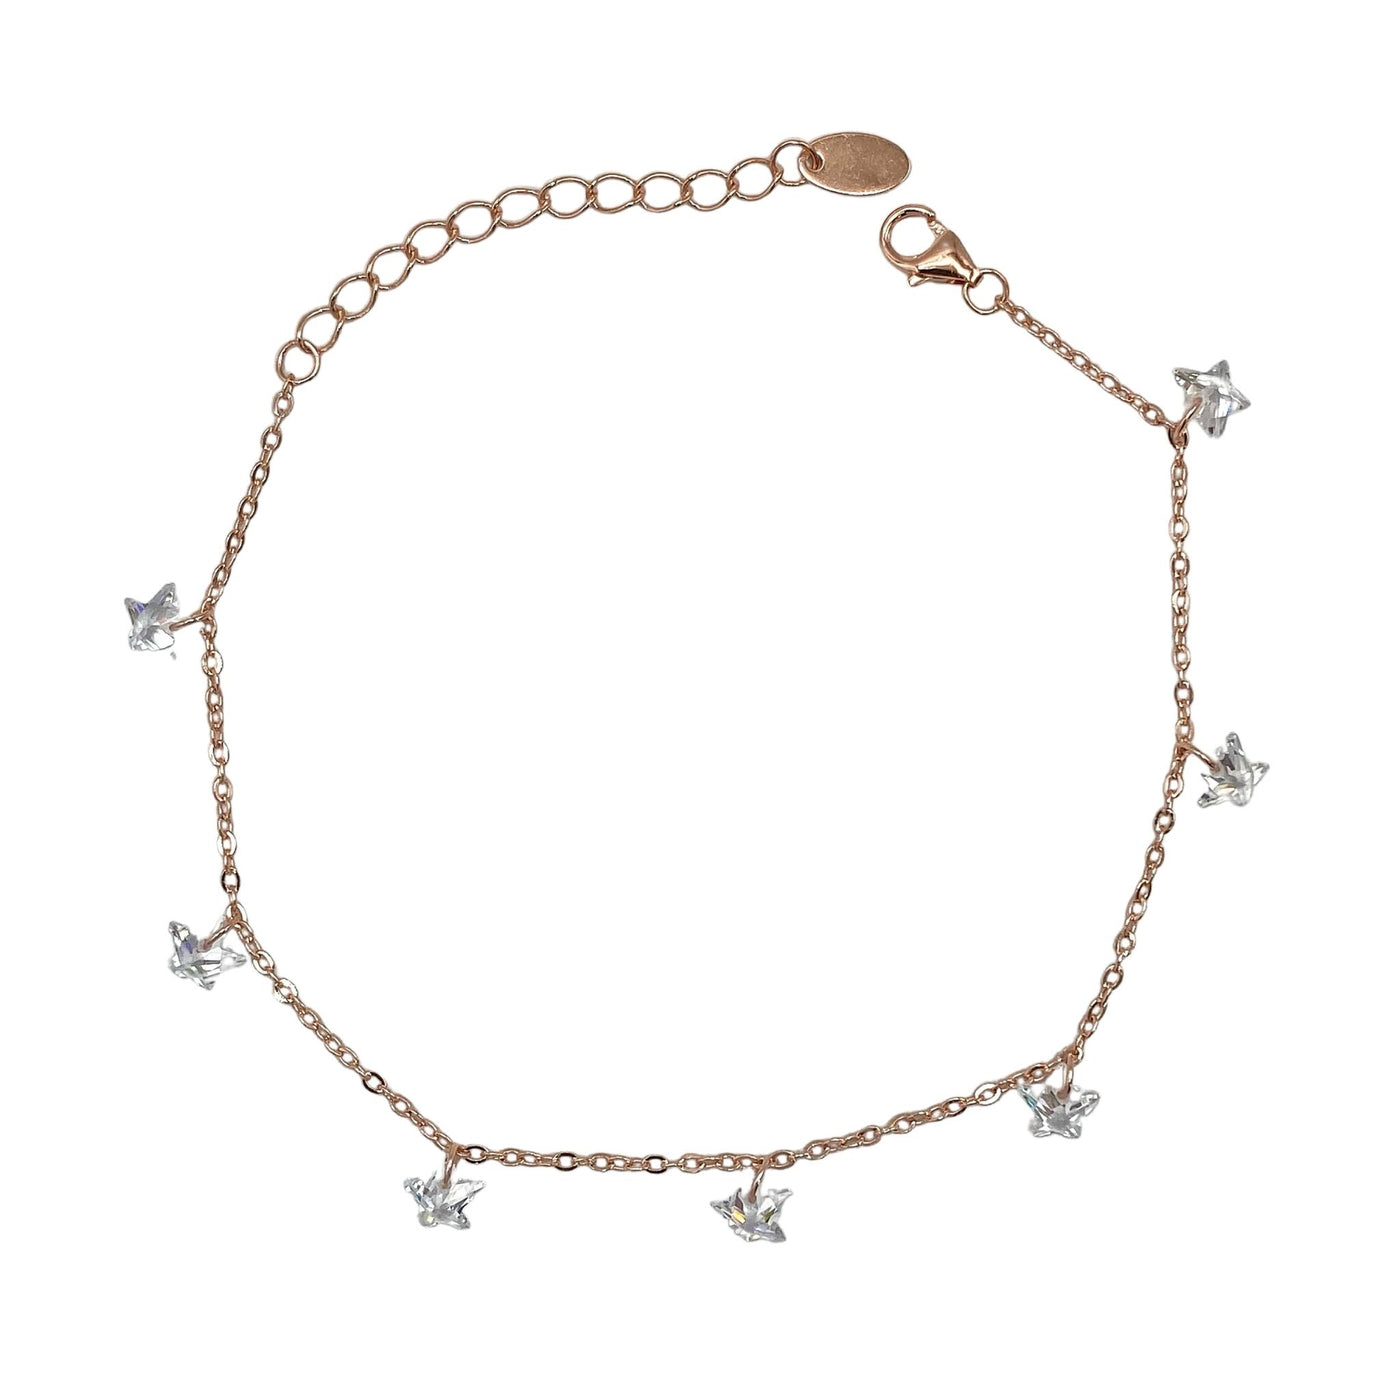 Silver bracelet with zirconia stars charms